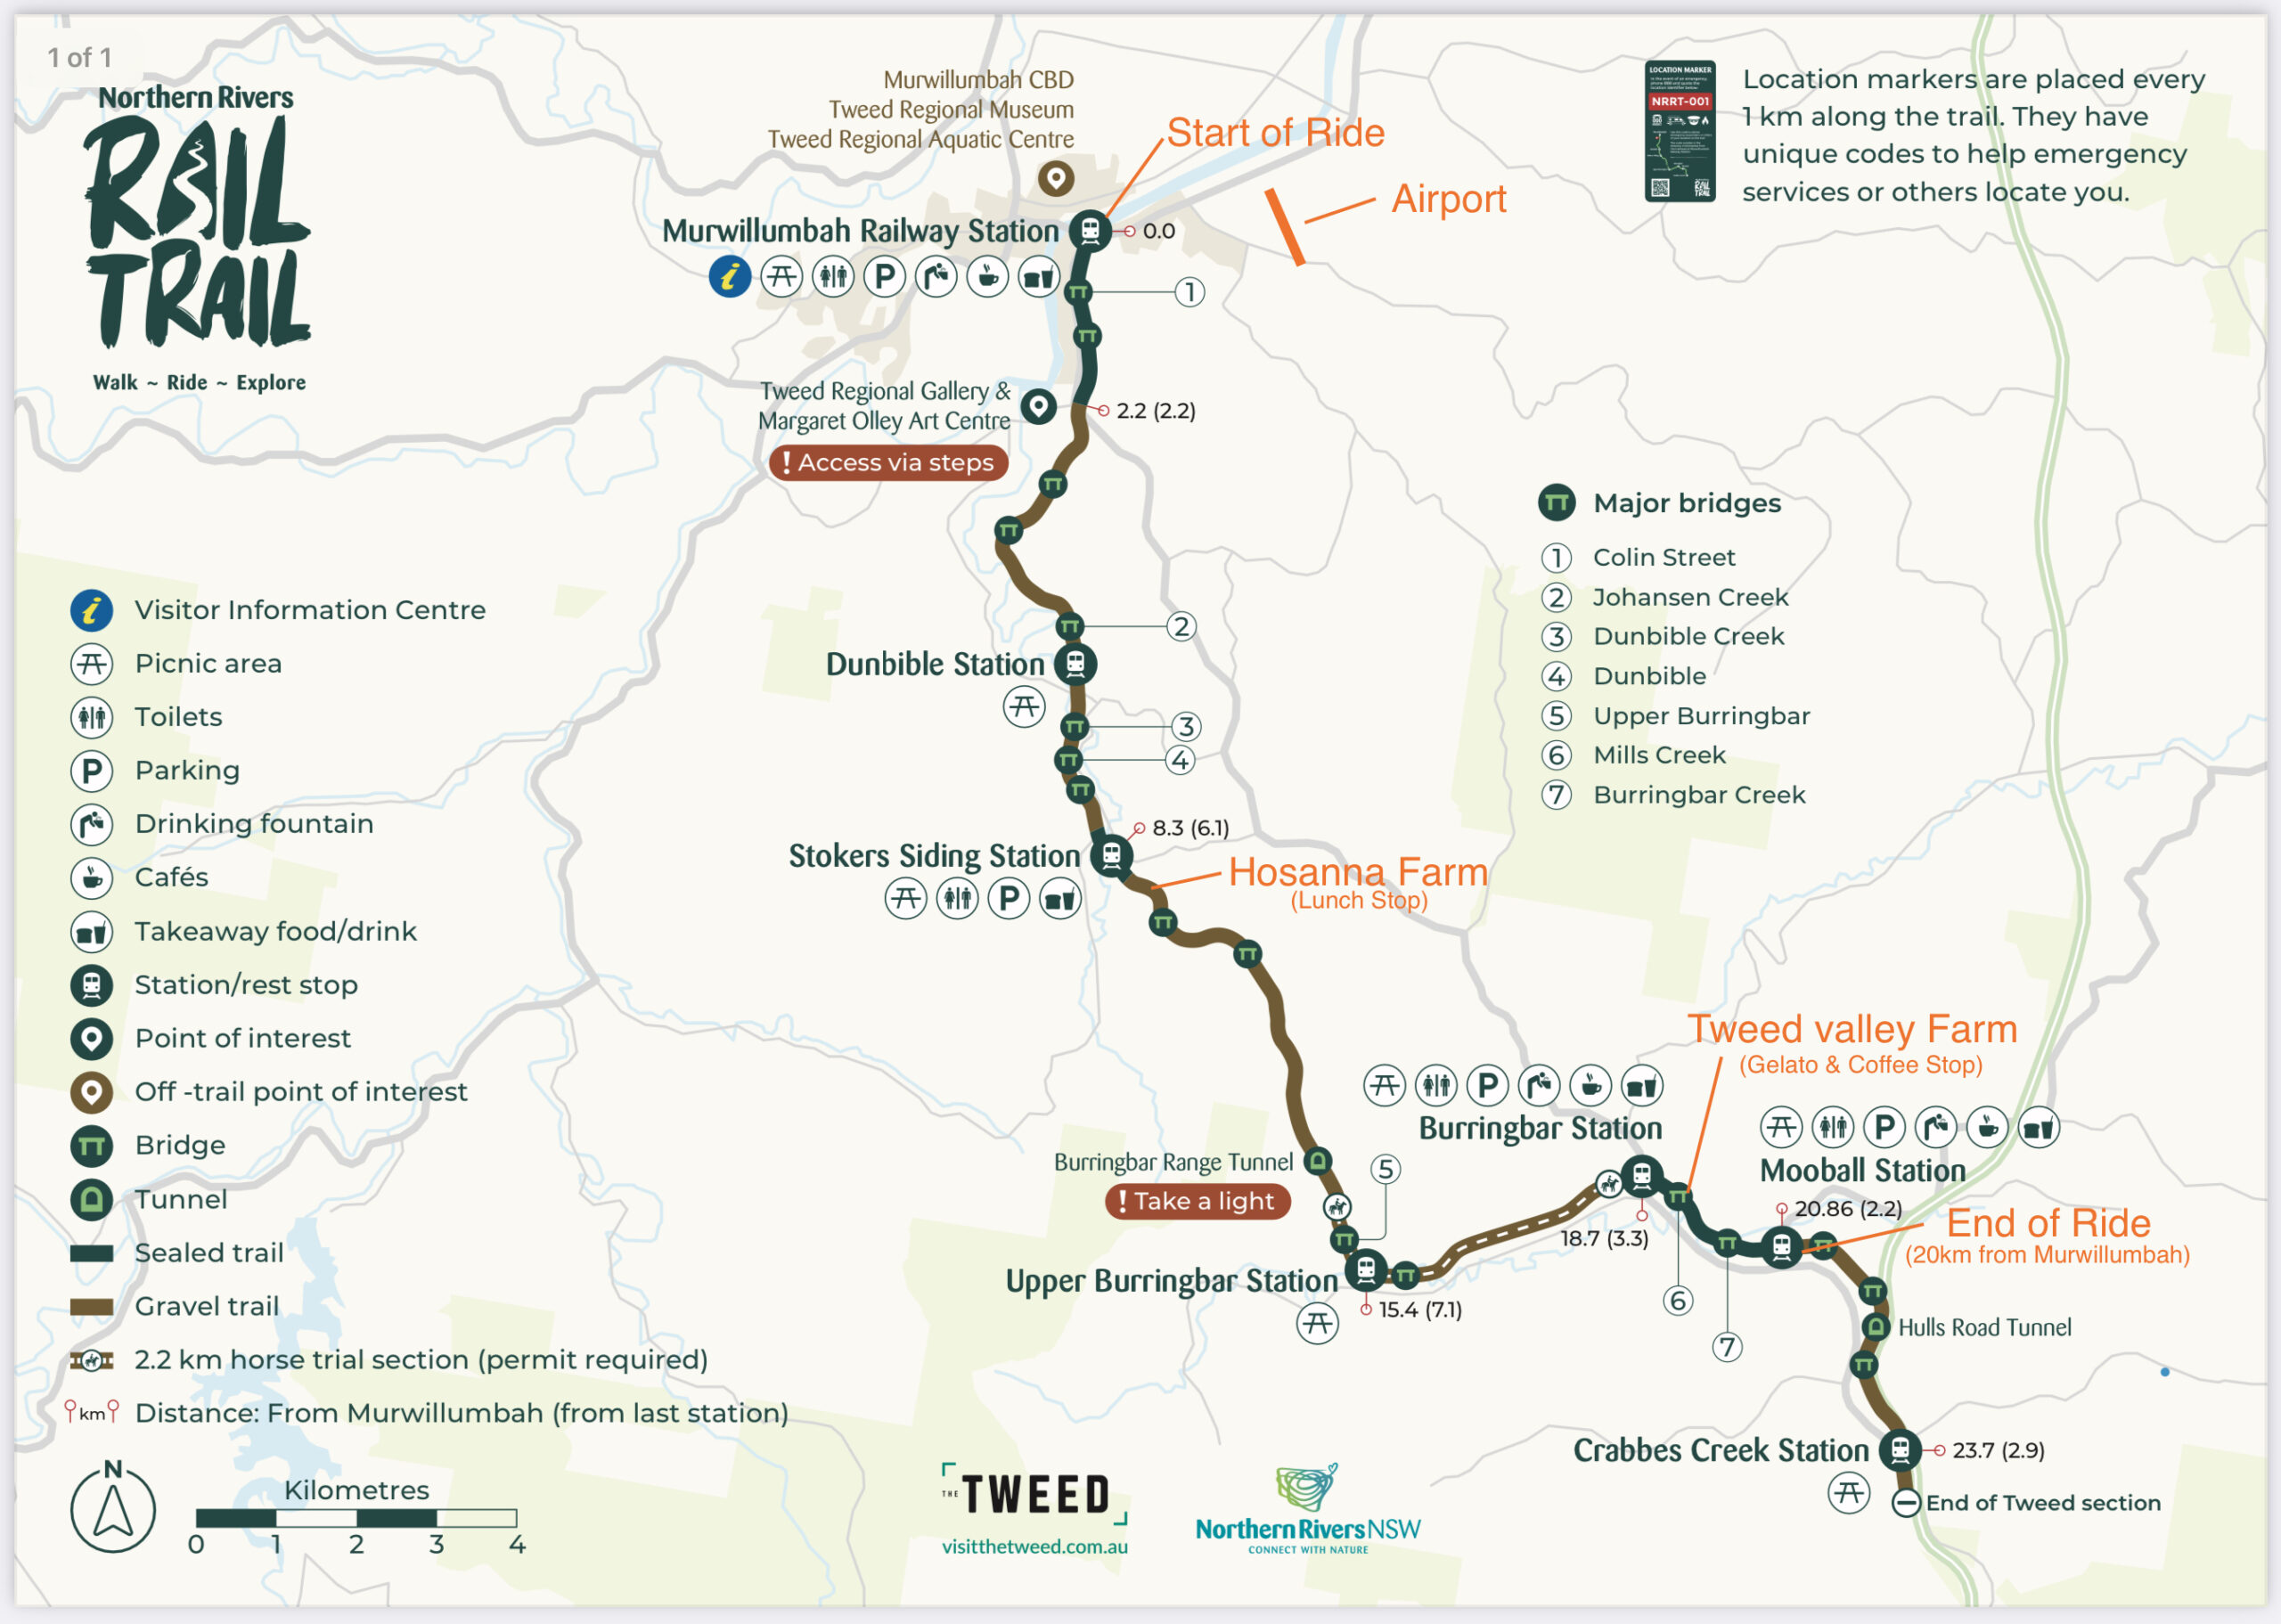 Northern Rail Trail - Trail Finder